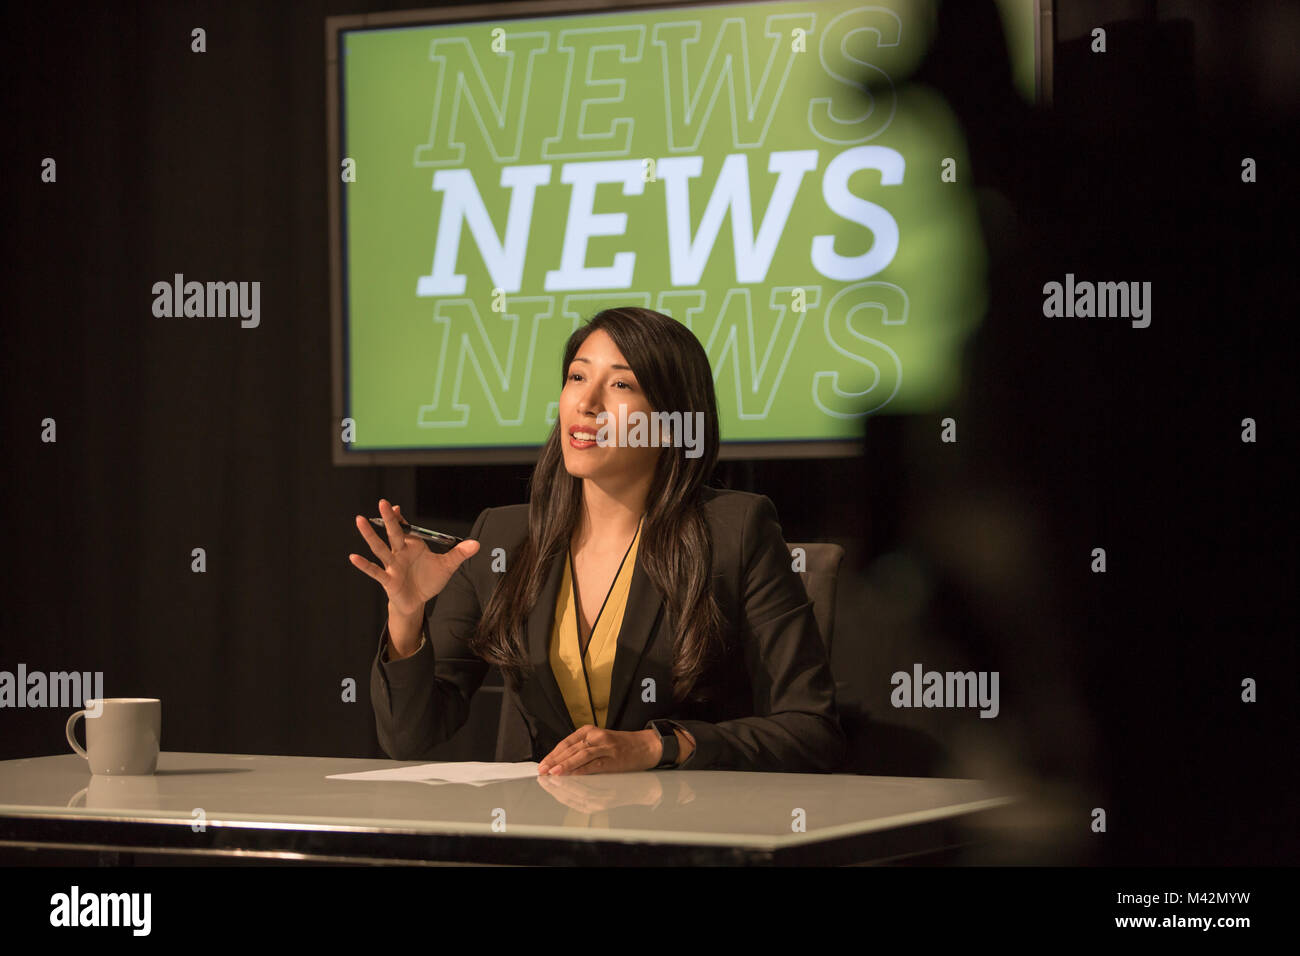 News presenter in a TV broadcasting studio Stock Photo